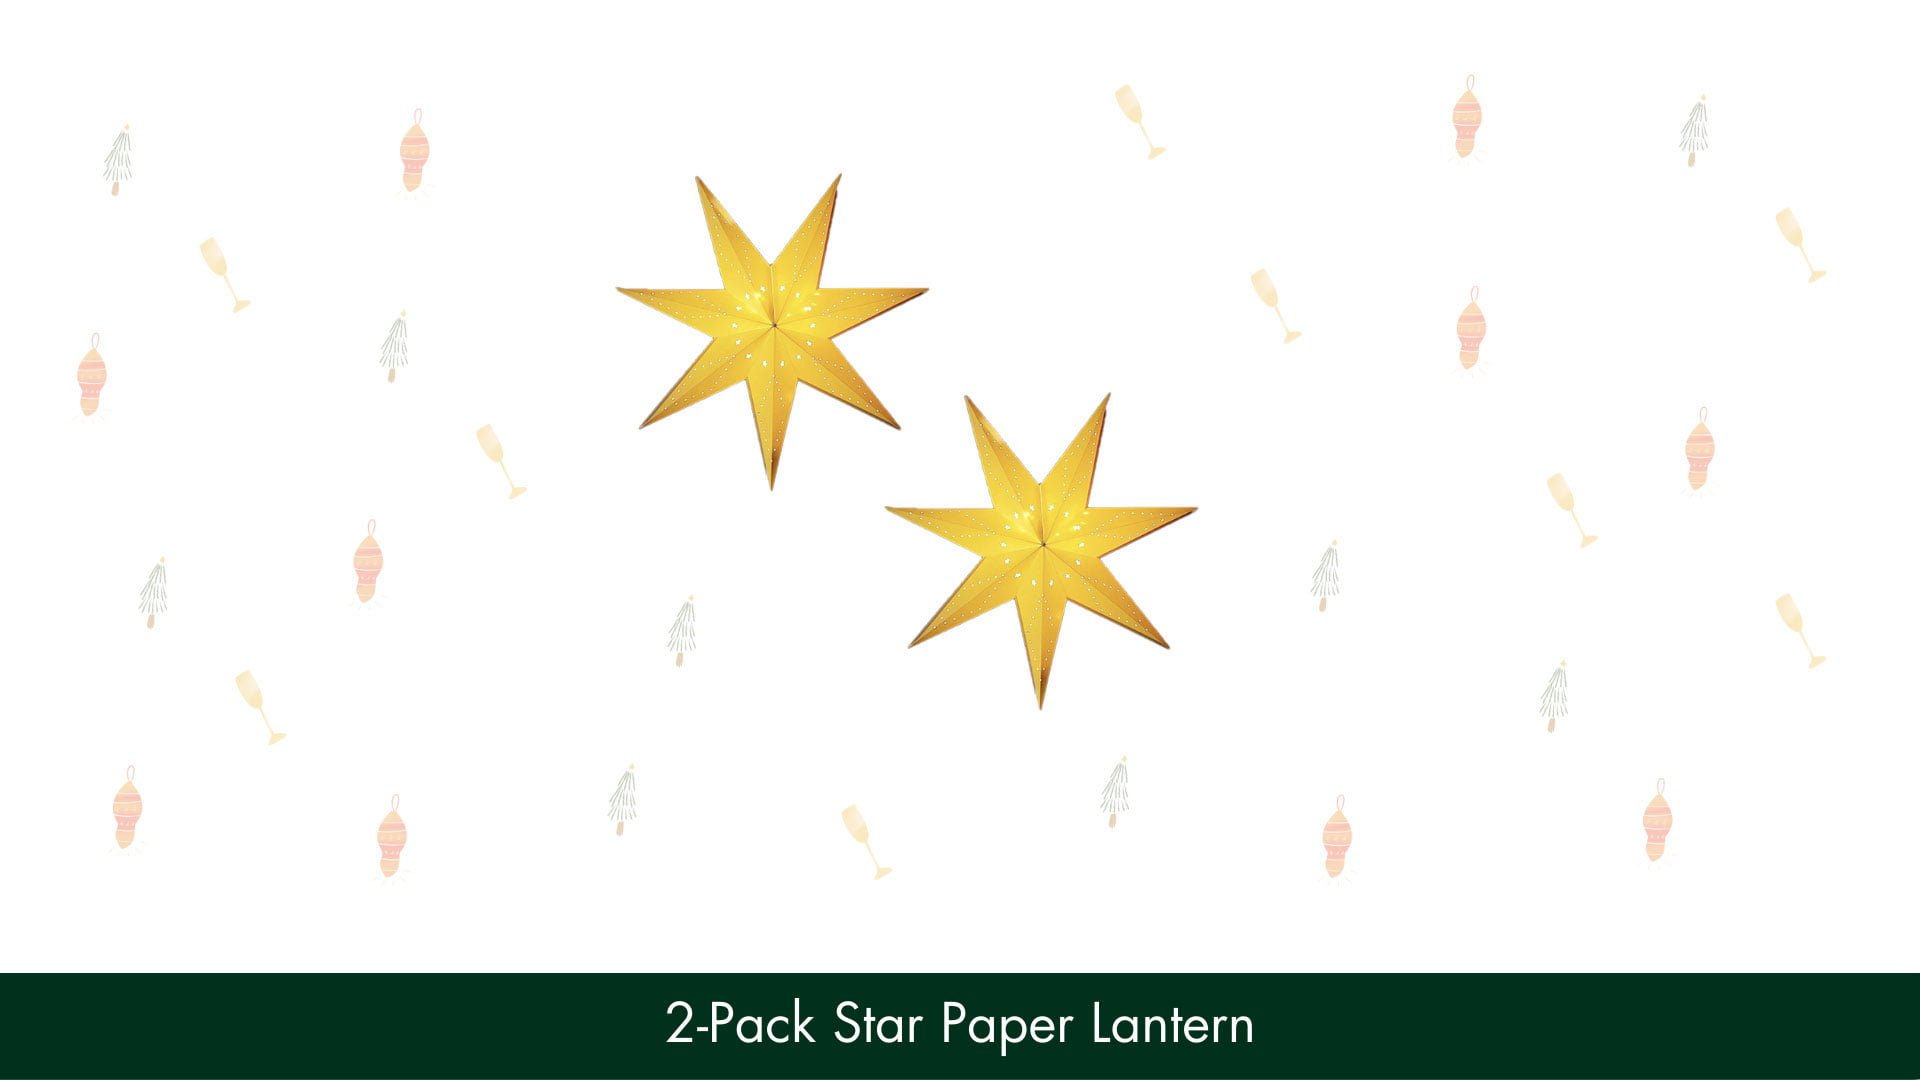 2 Pack Star Paper Lantern